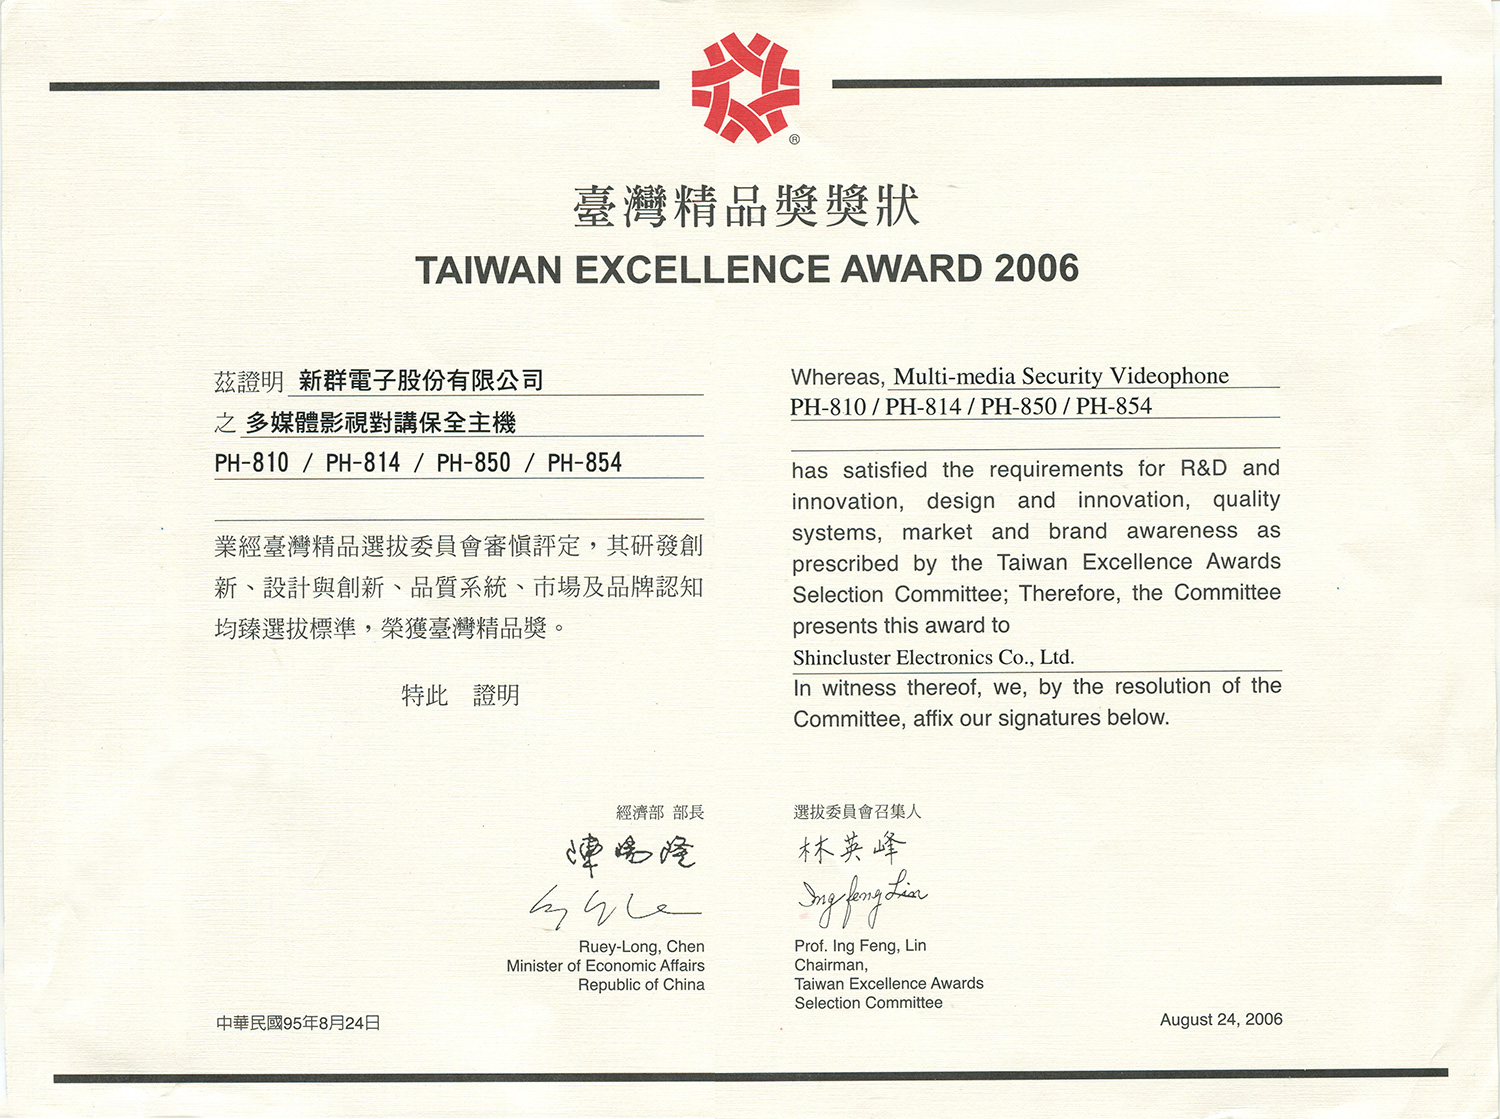 PH-810 series won 14th Taiwan symbol of excellence winner award.